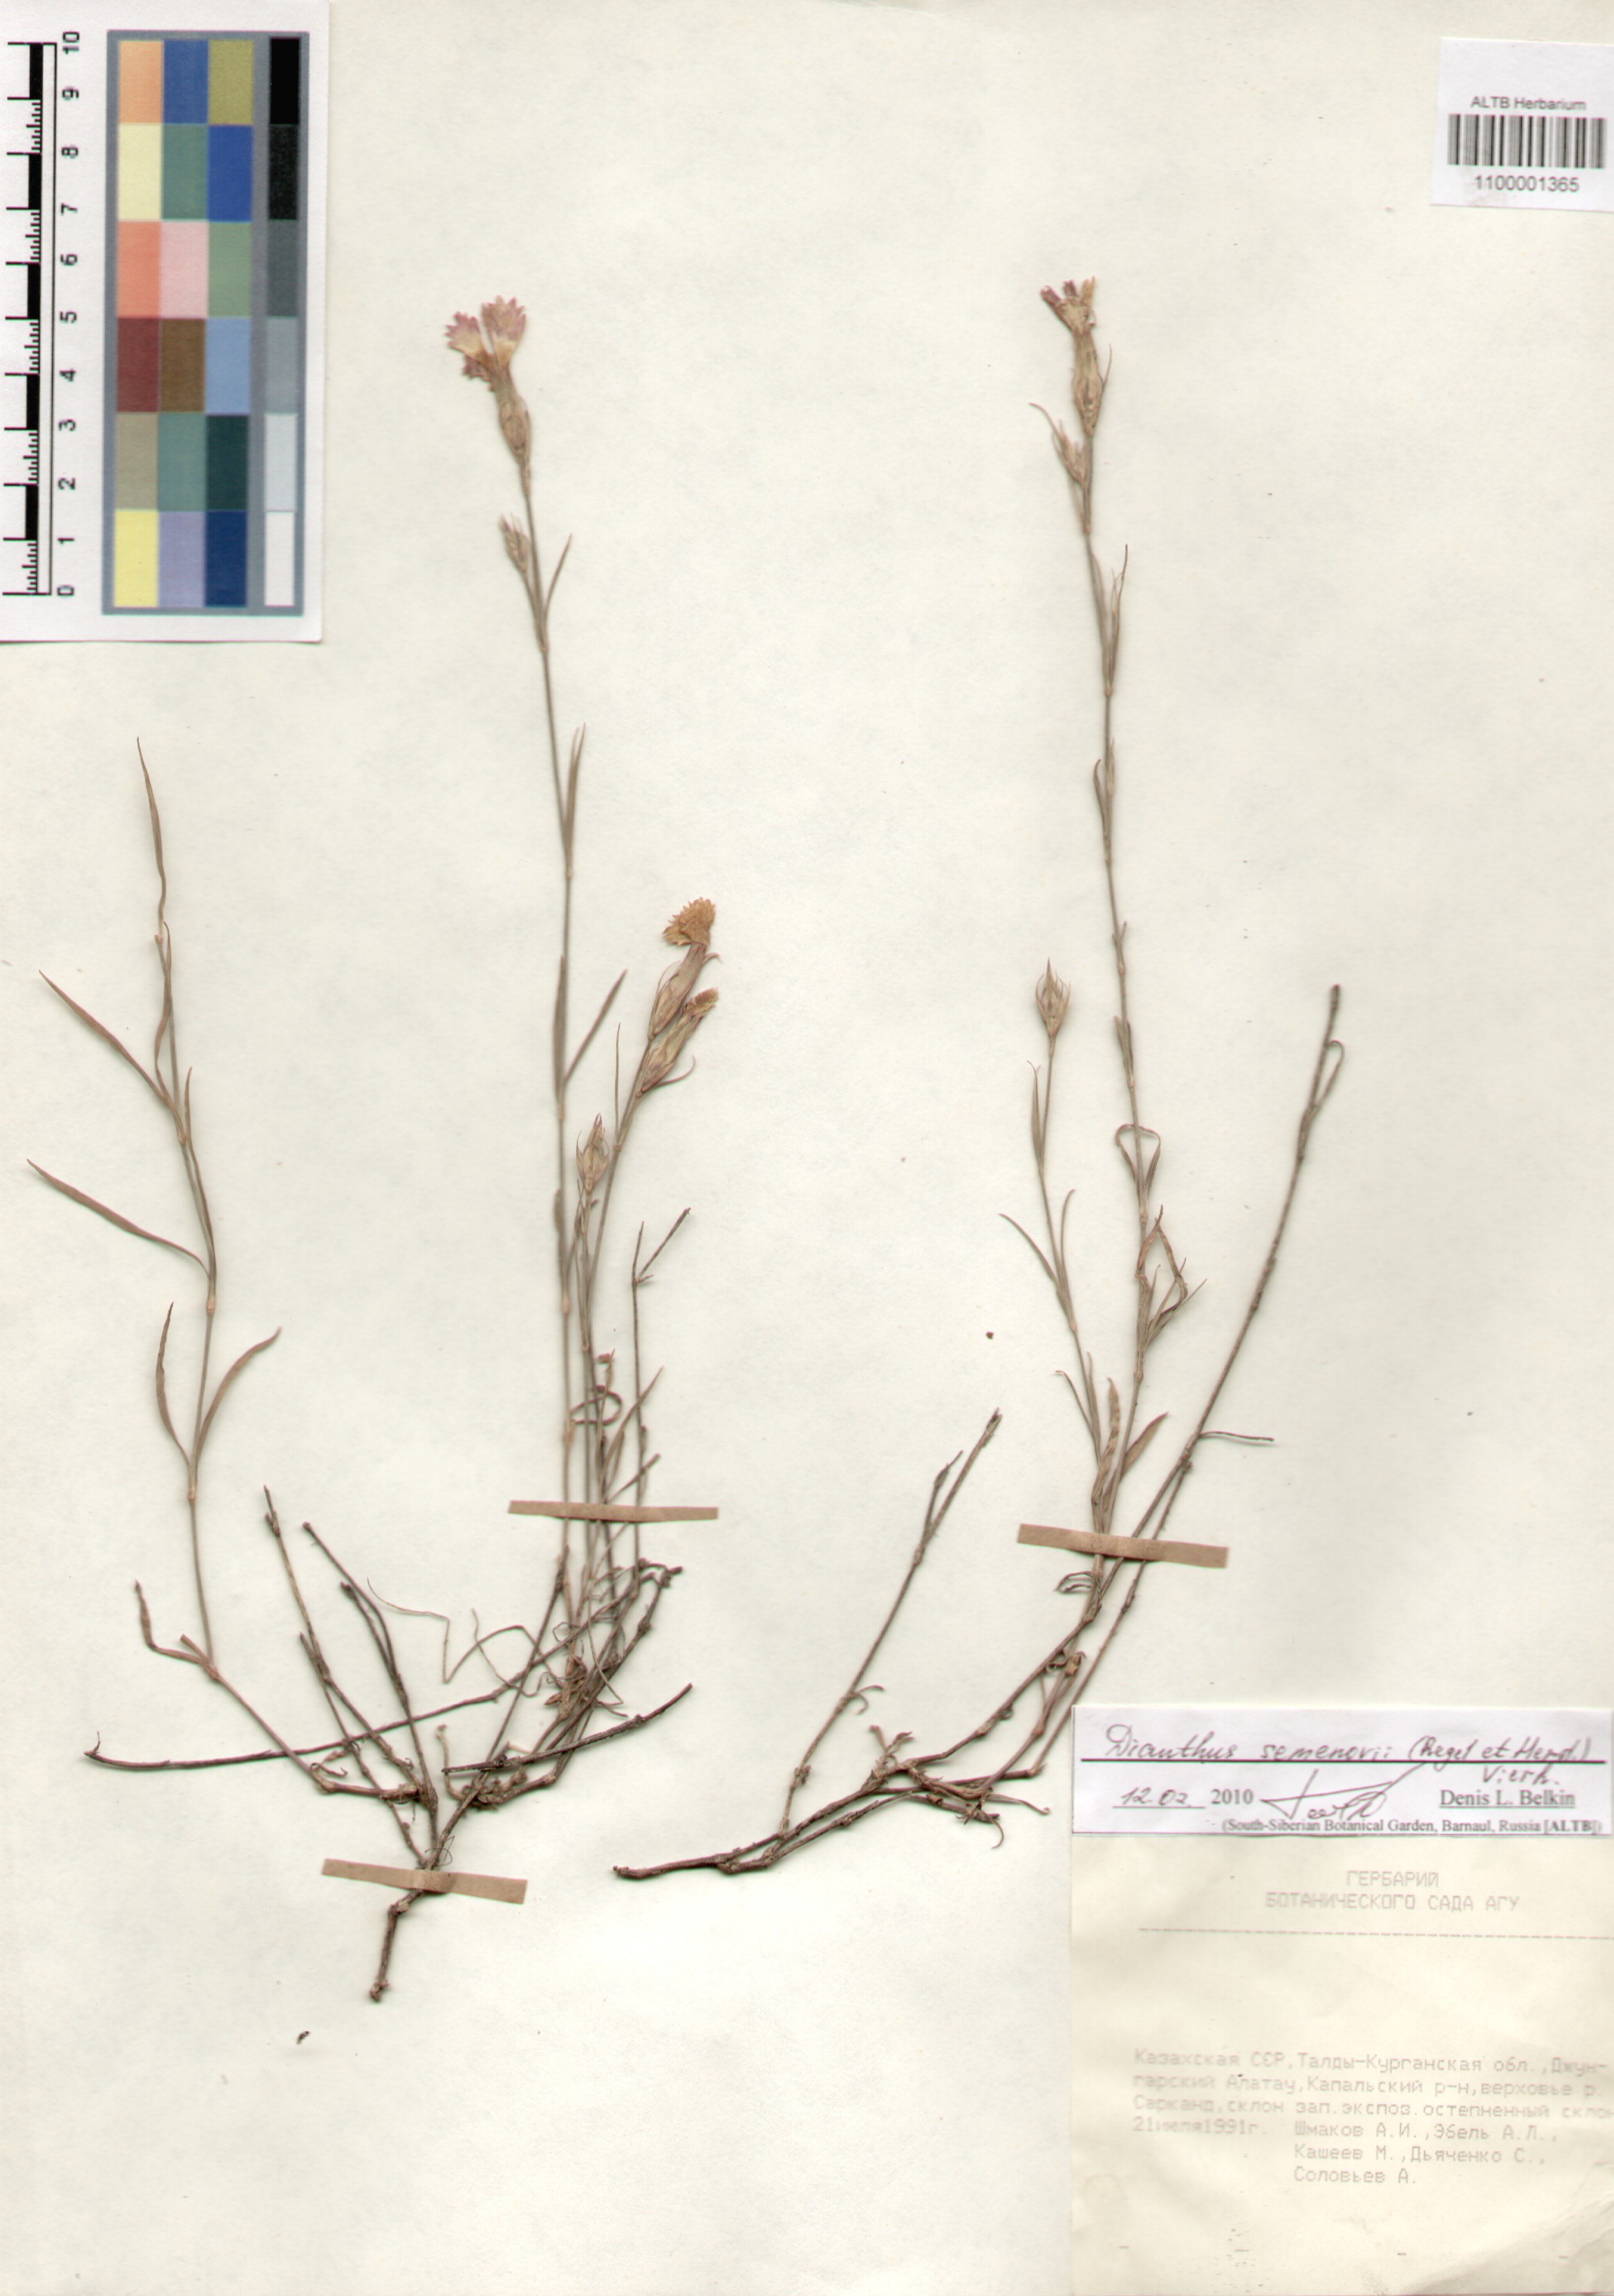 Caryophyllaceae,Dianthus semenovii (Regel et Herd) Vierh.